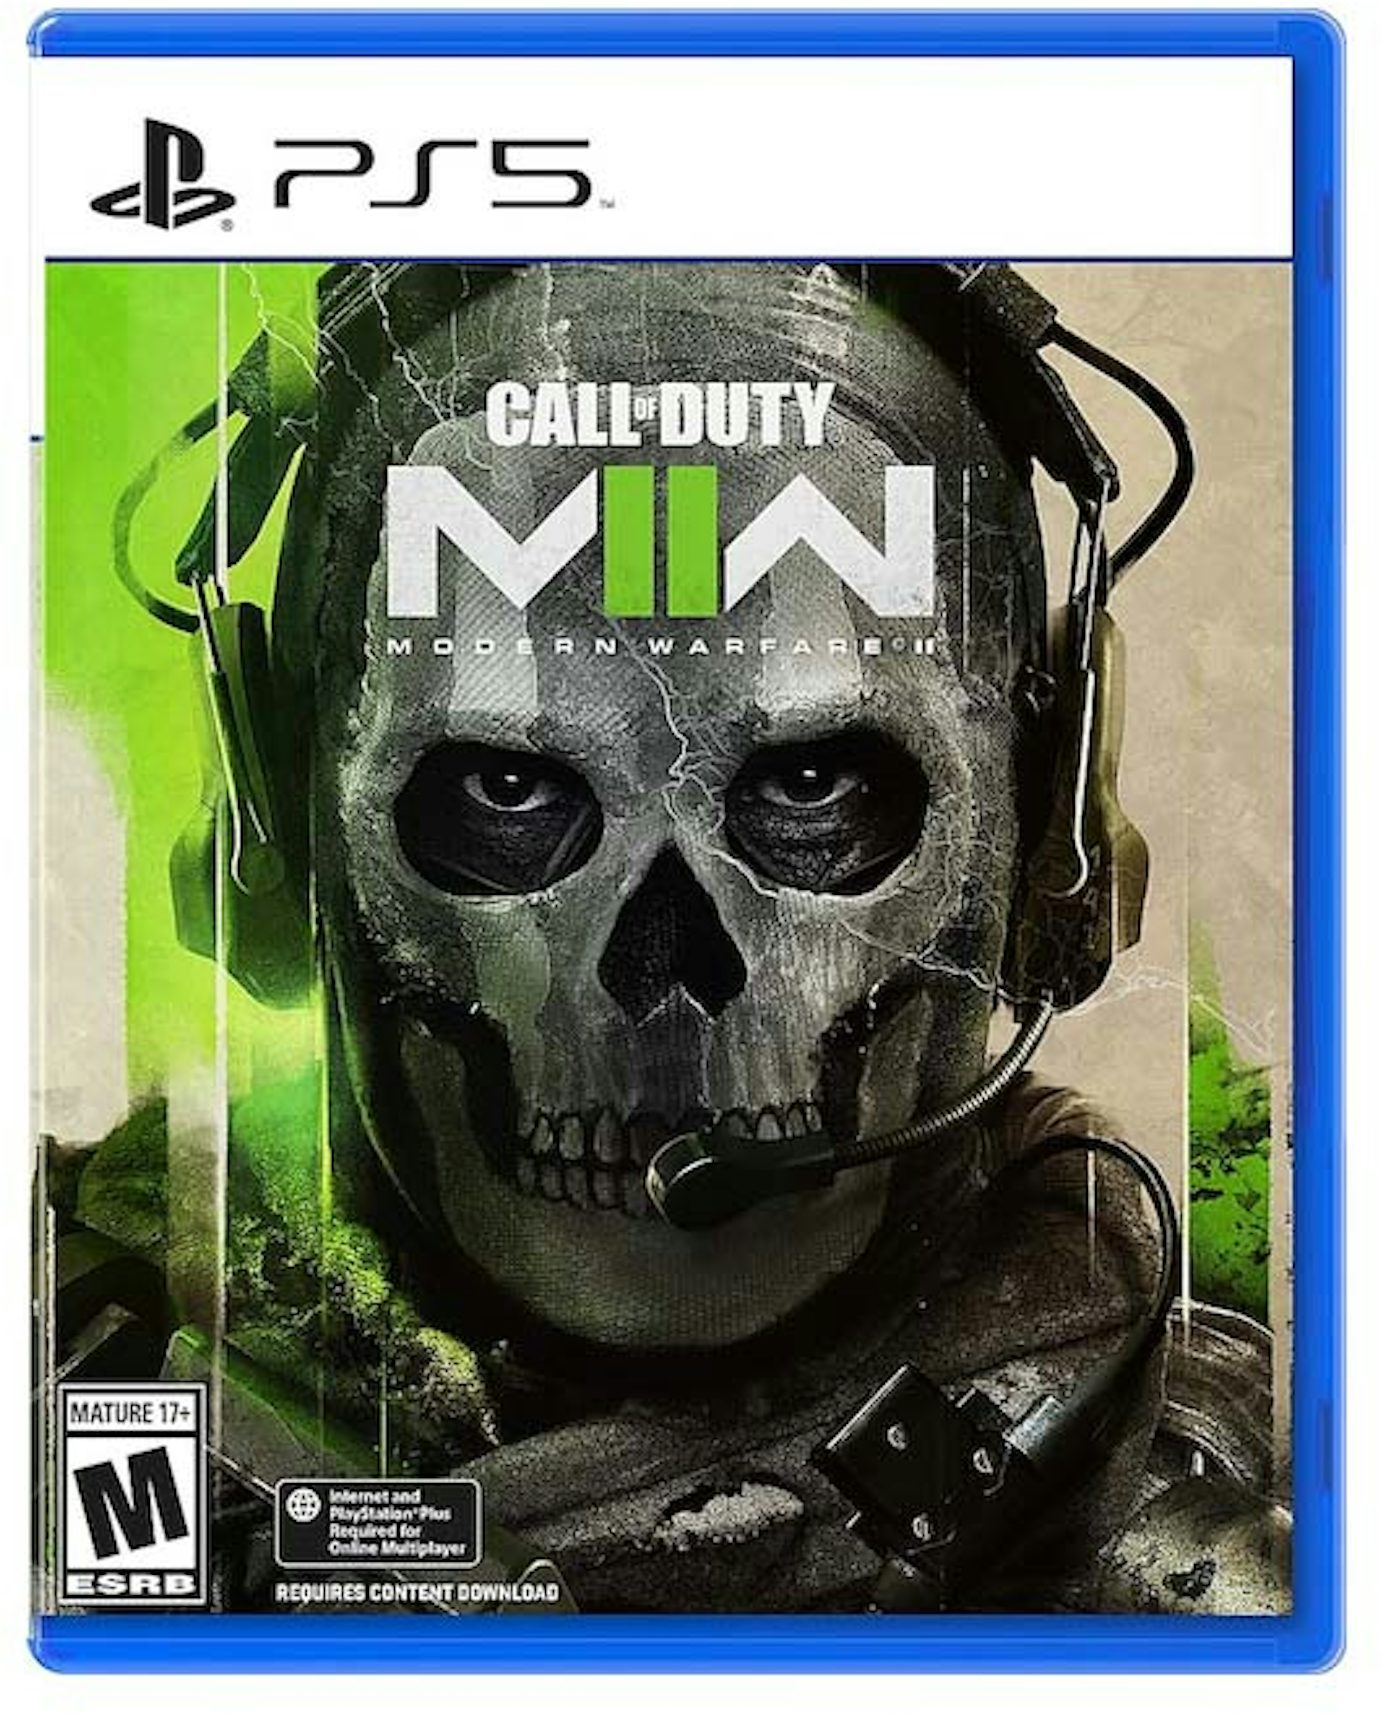 Call of Duty Modern Warfare II: veja comparativo do beta aberto no PS4, PS4  Pro e PS5